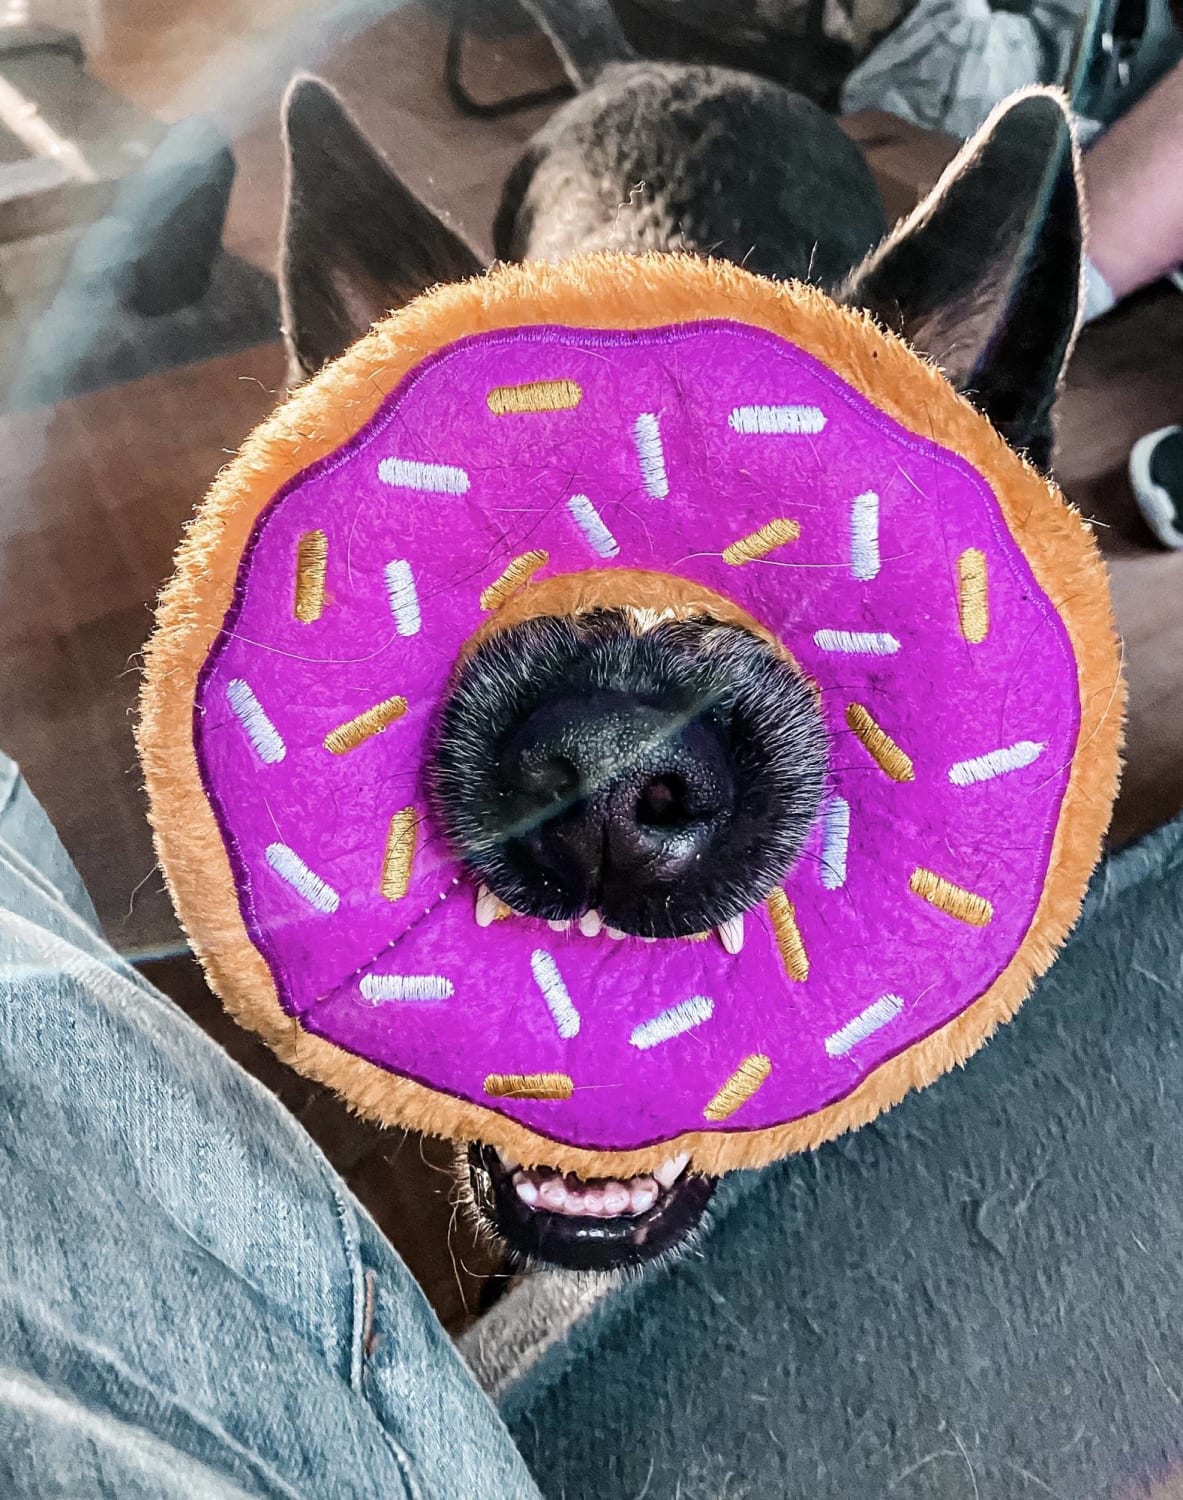 My boy Bode bringing me his favorite donut